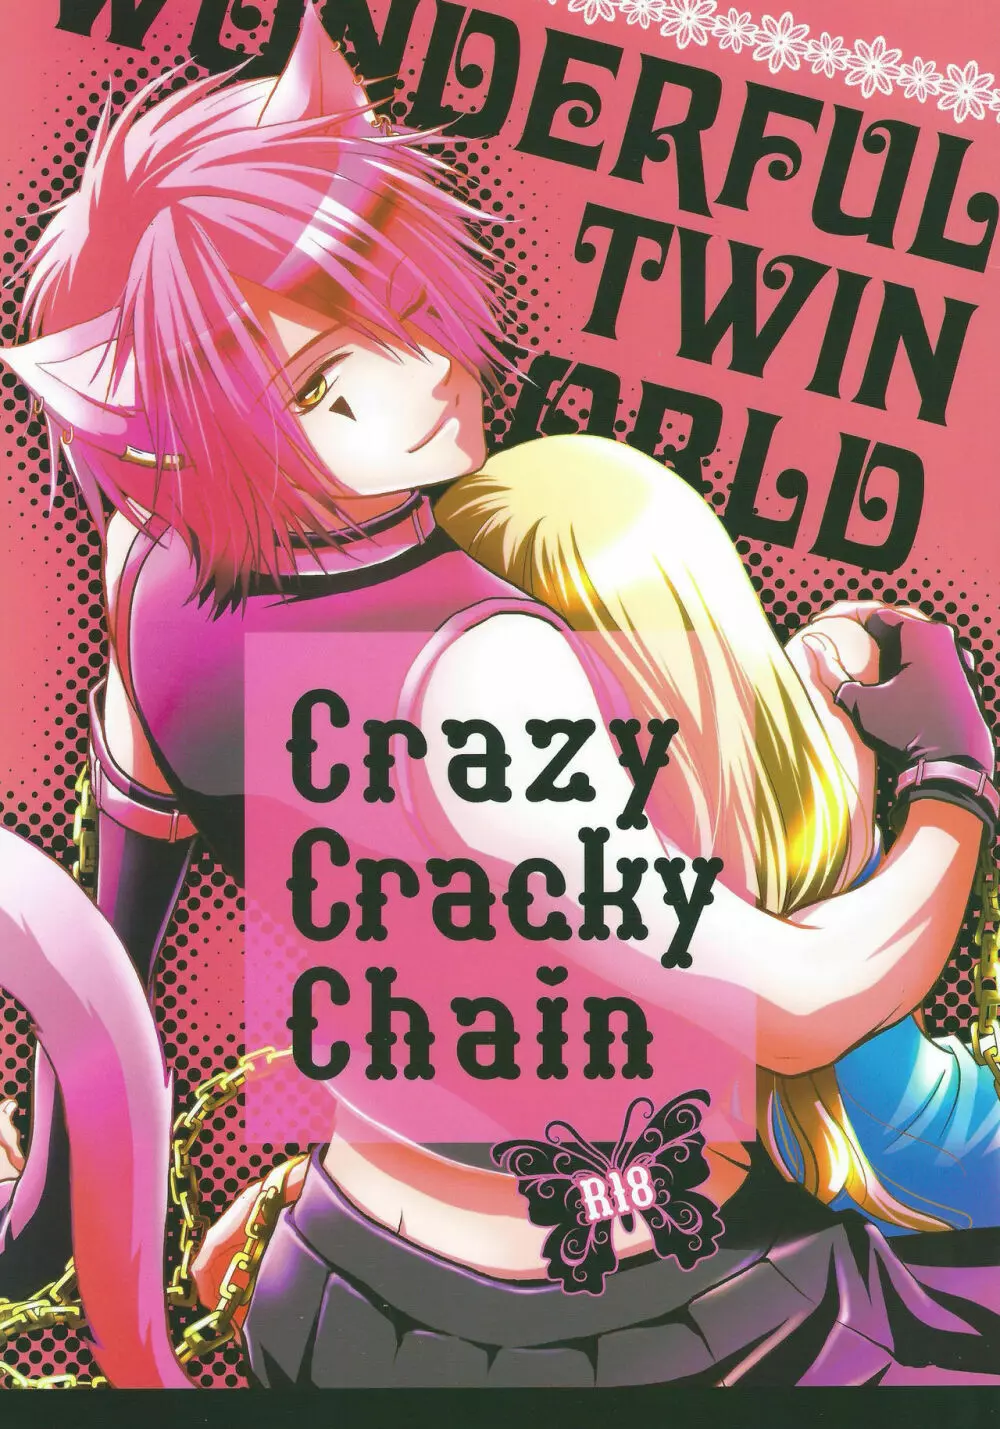 Crazy Cracky Chain